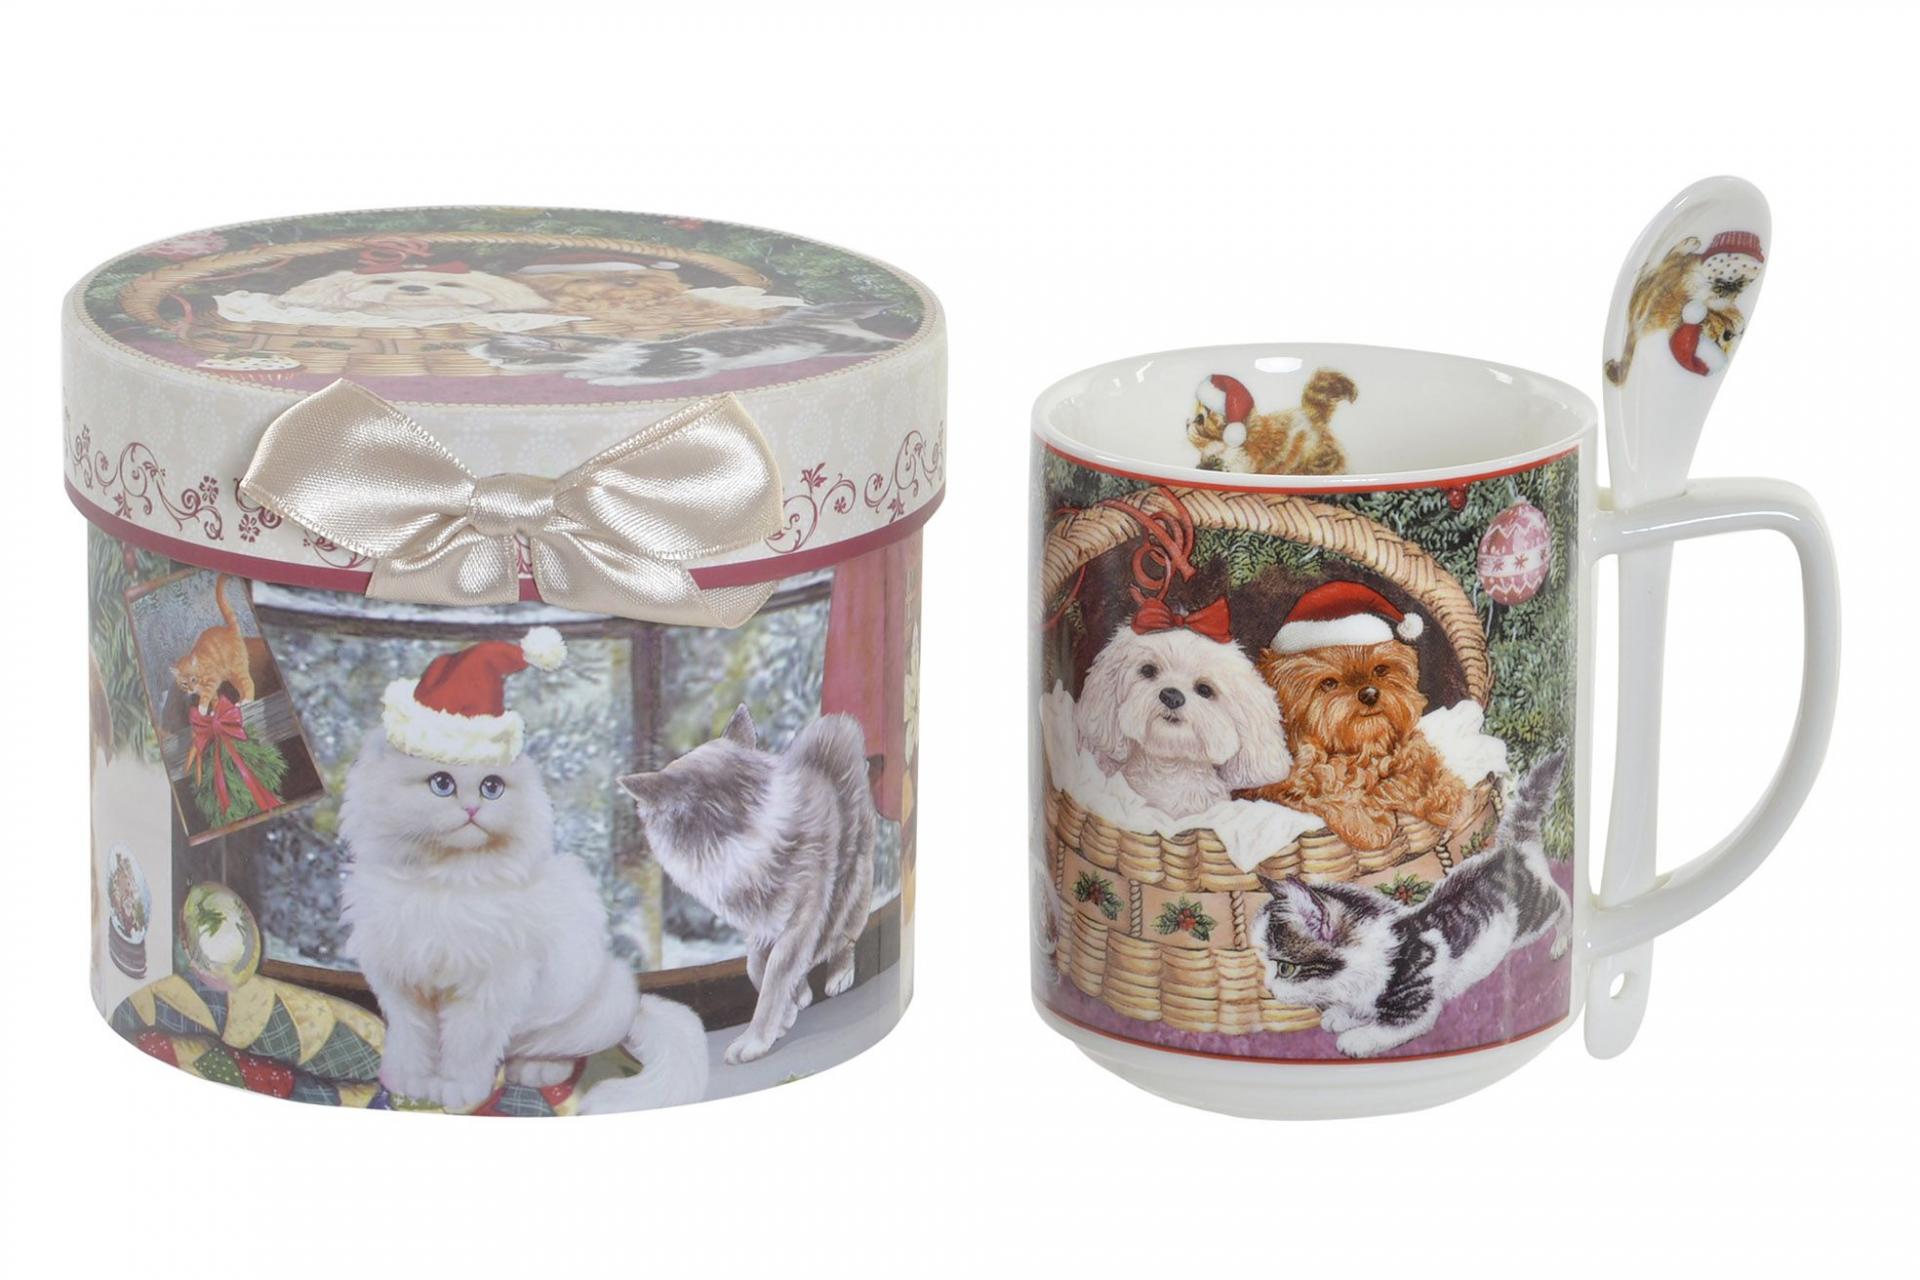 taza-mug-con-cuchara-decorada-mascotas-navidad-motivos-navideños-caja-decorada-porcelana-300ml-item-NV-174014-regalo-personal-navidad-lomejorsg.jpg